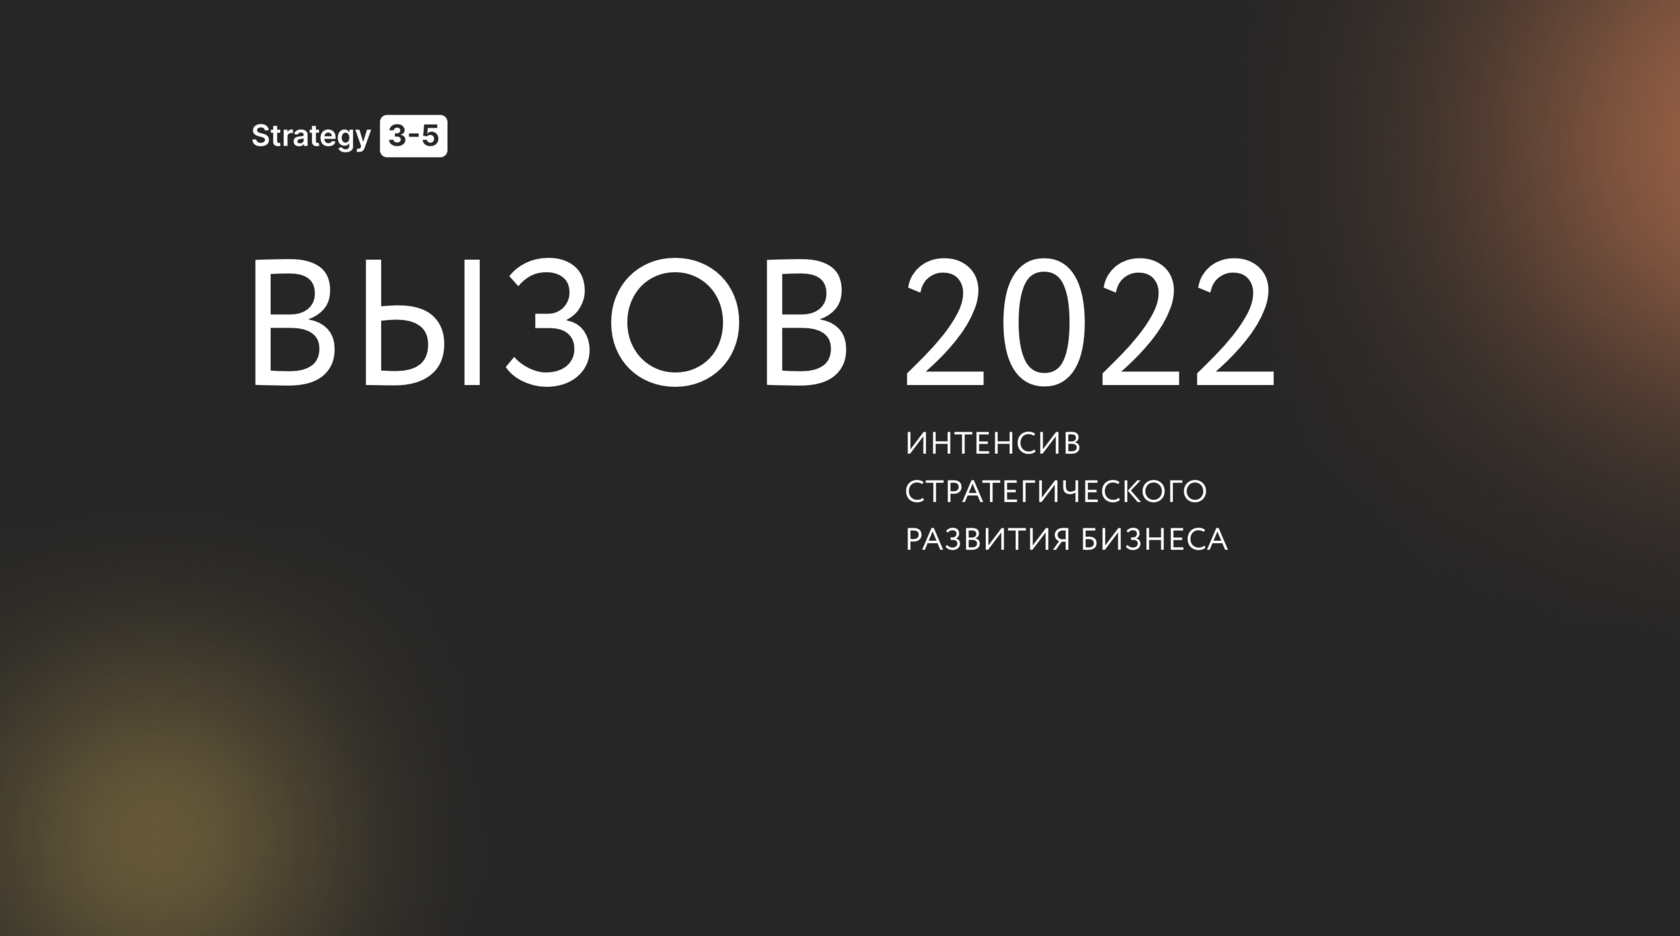 Вызов 2022. Супер вызов 2022. Супер вызов 2022 для друзей тест.